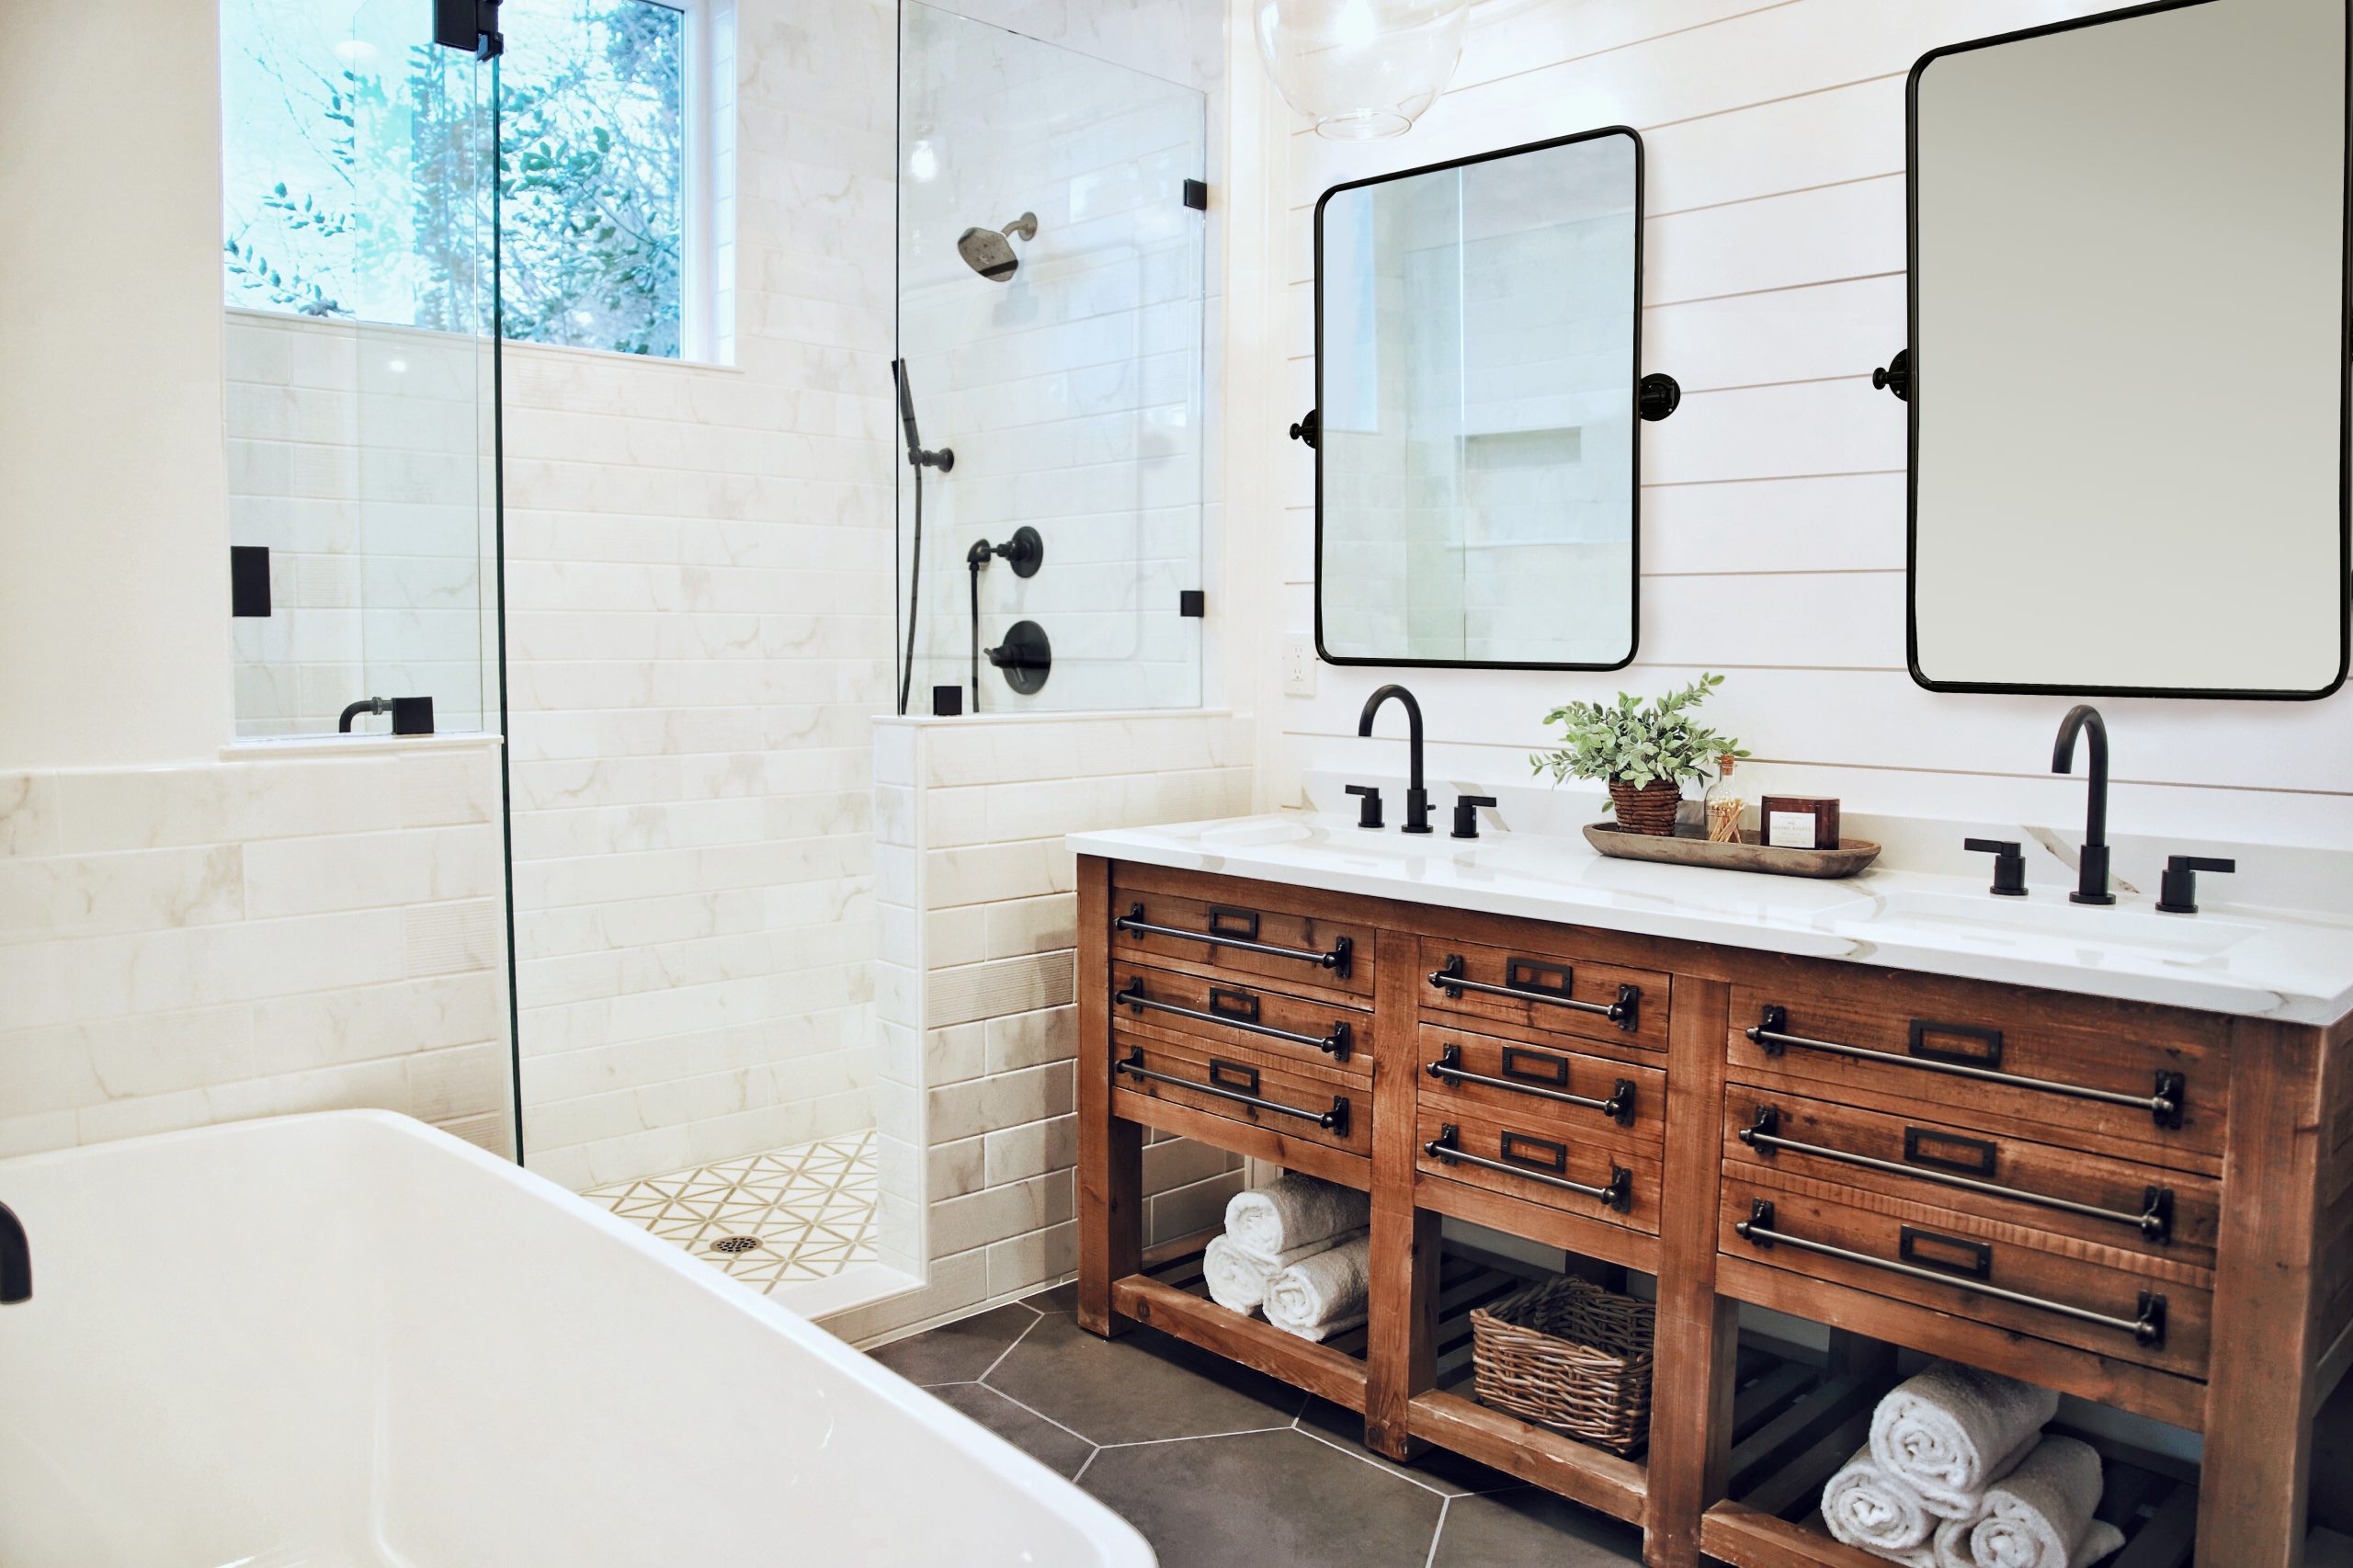 Bathroom Mirror Ideas – 10 Beautiful Designs To Suit any Bath, Shower, or Powder Room